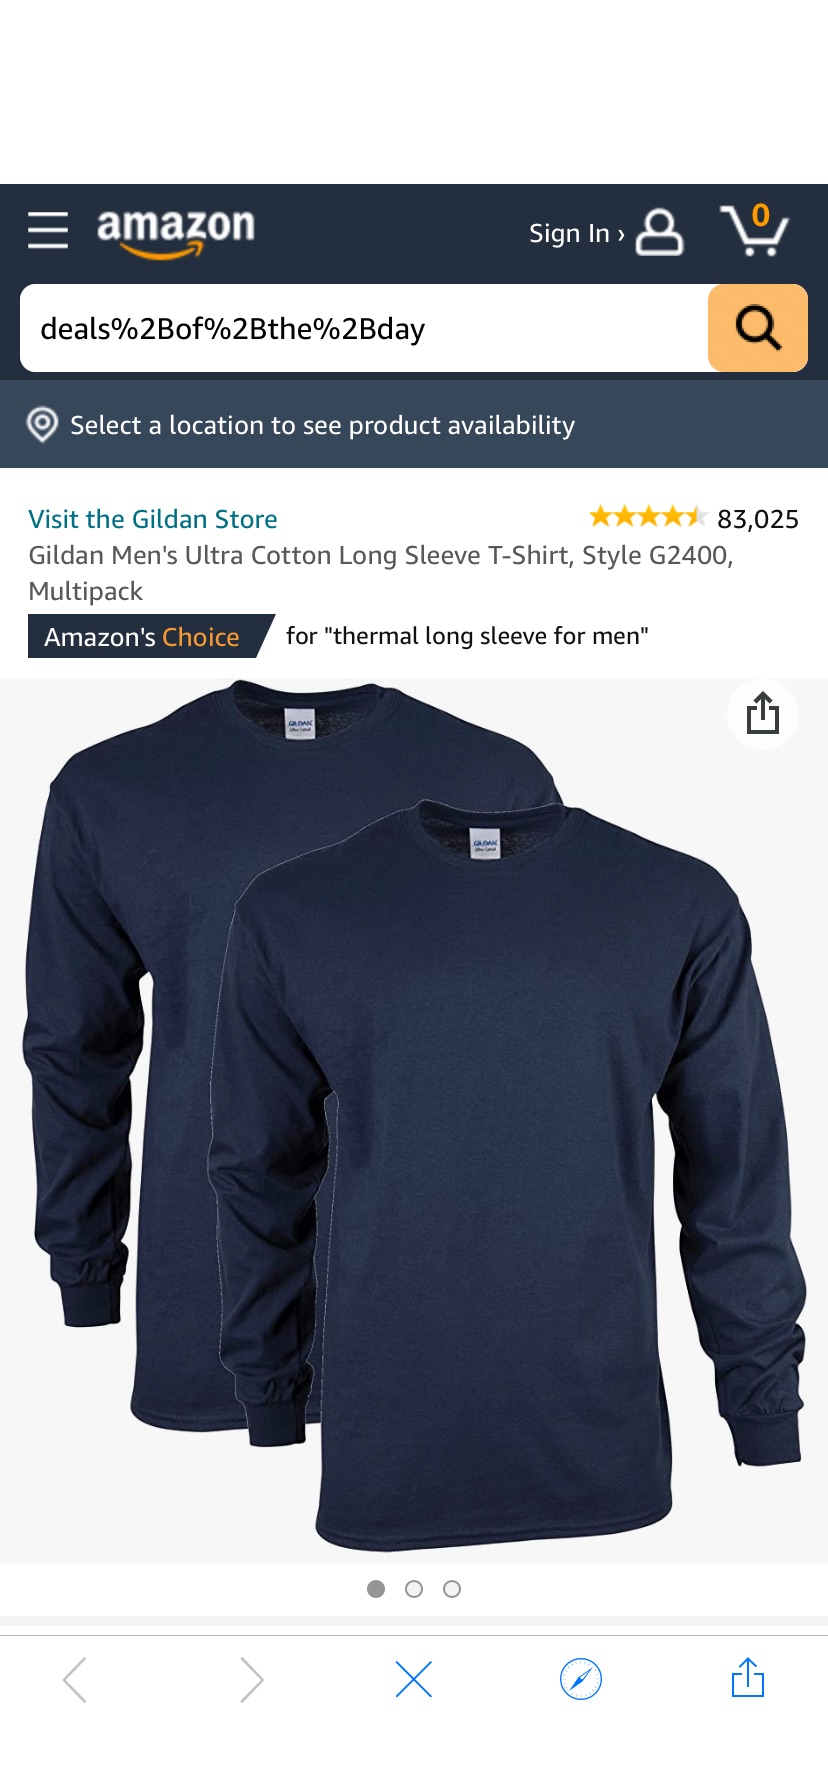 Gildan Men's Ultra Cotton Long Sleeve T-Shirt, Style G2400, Multipack, Navy (2-Pack), Medium | Amazon.com衣服